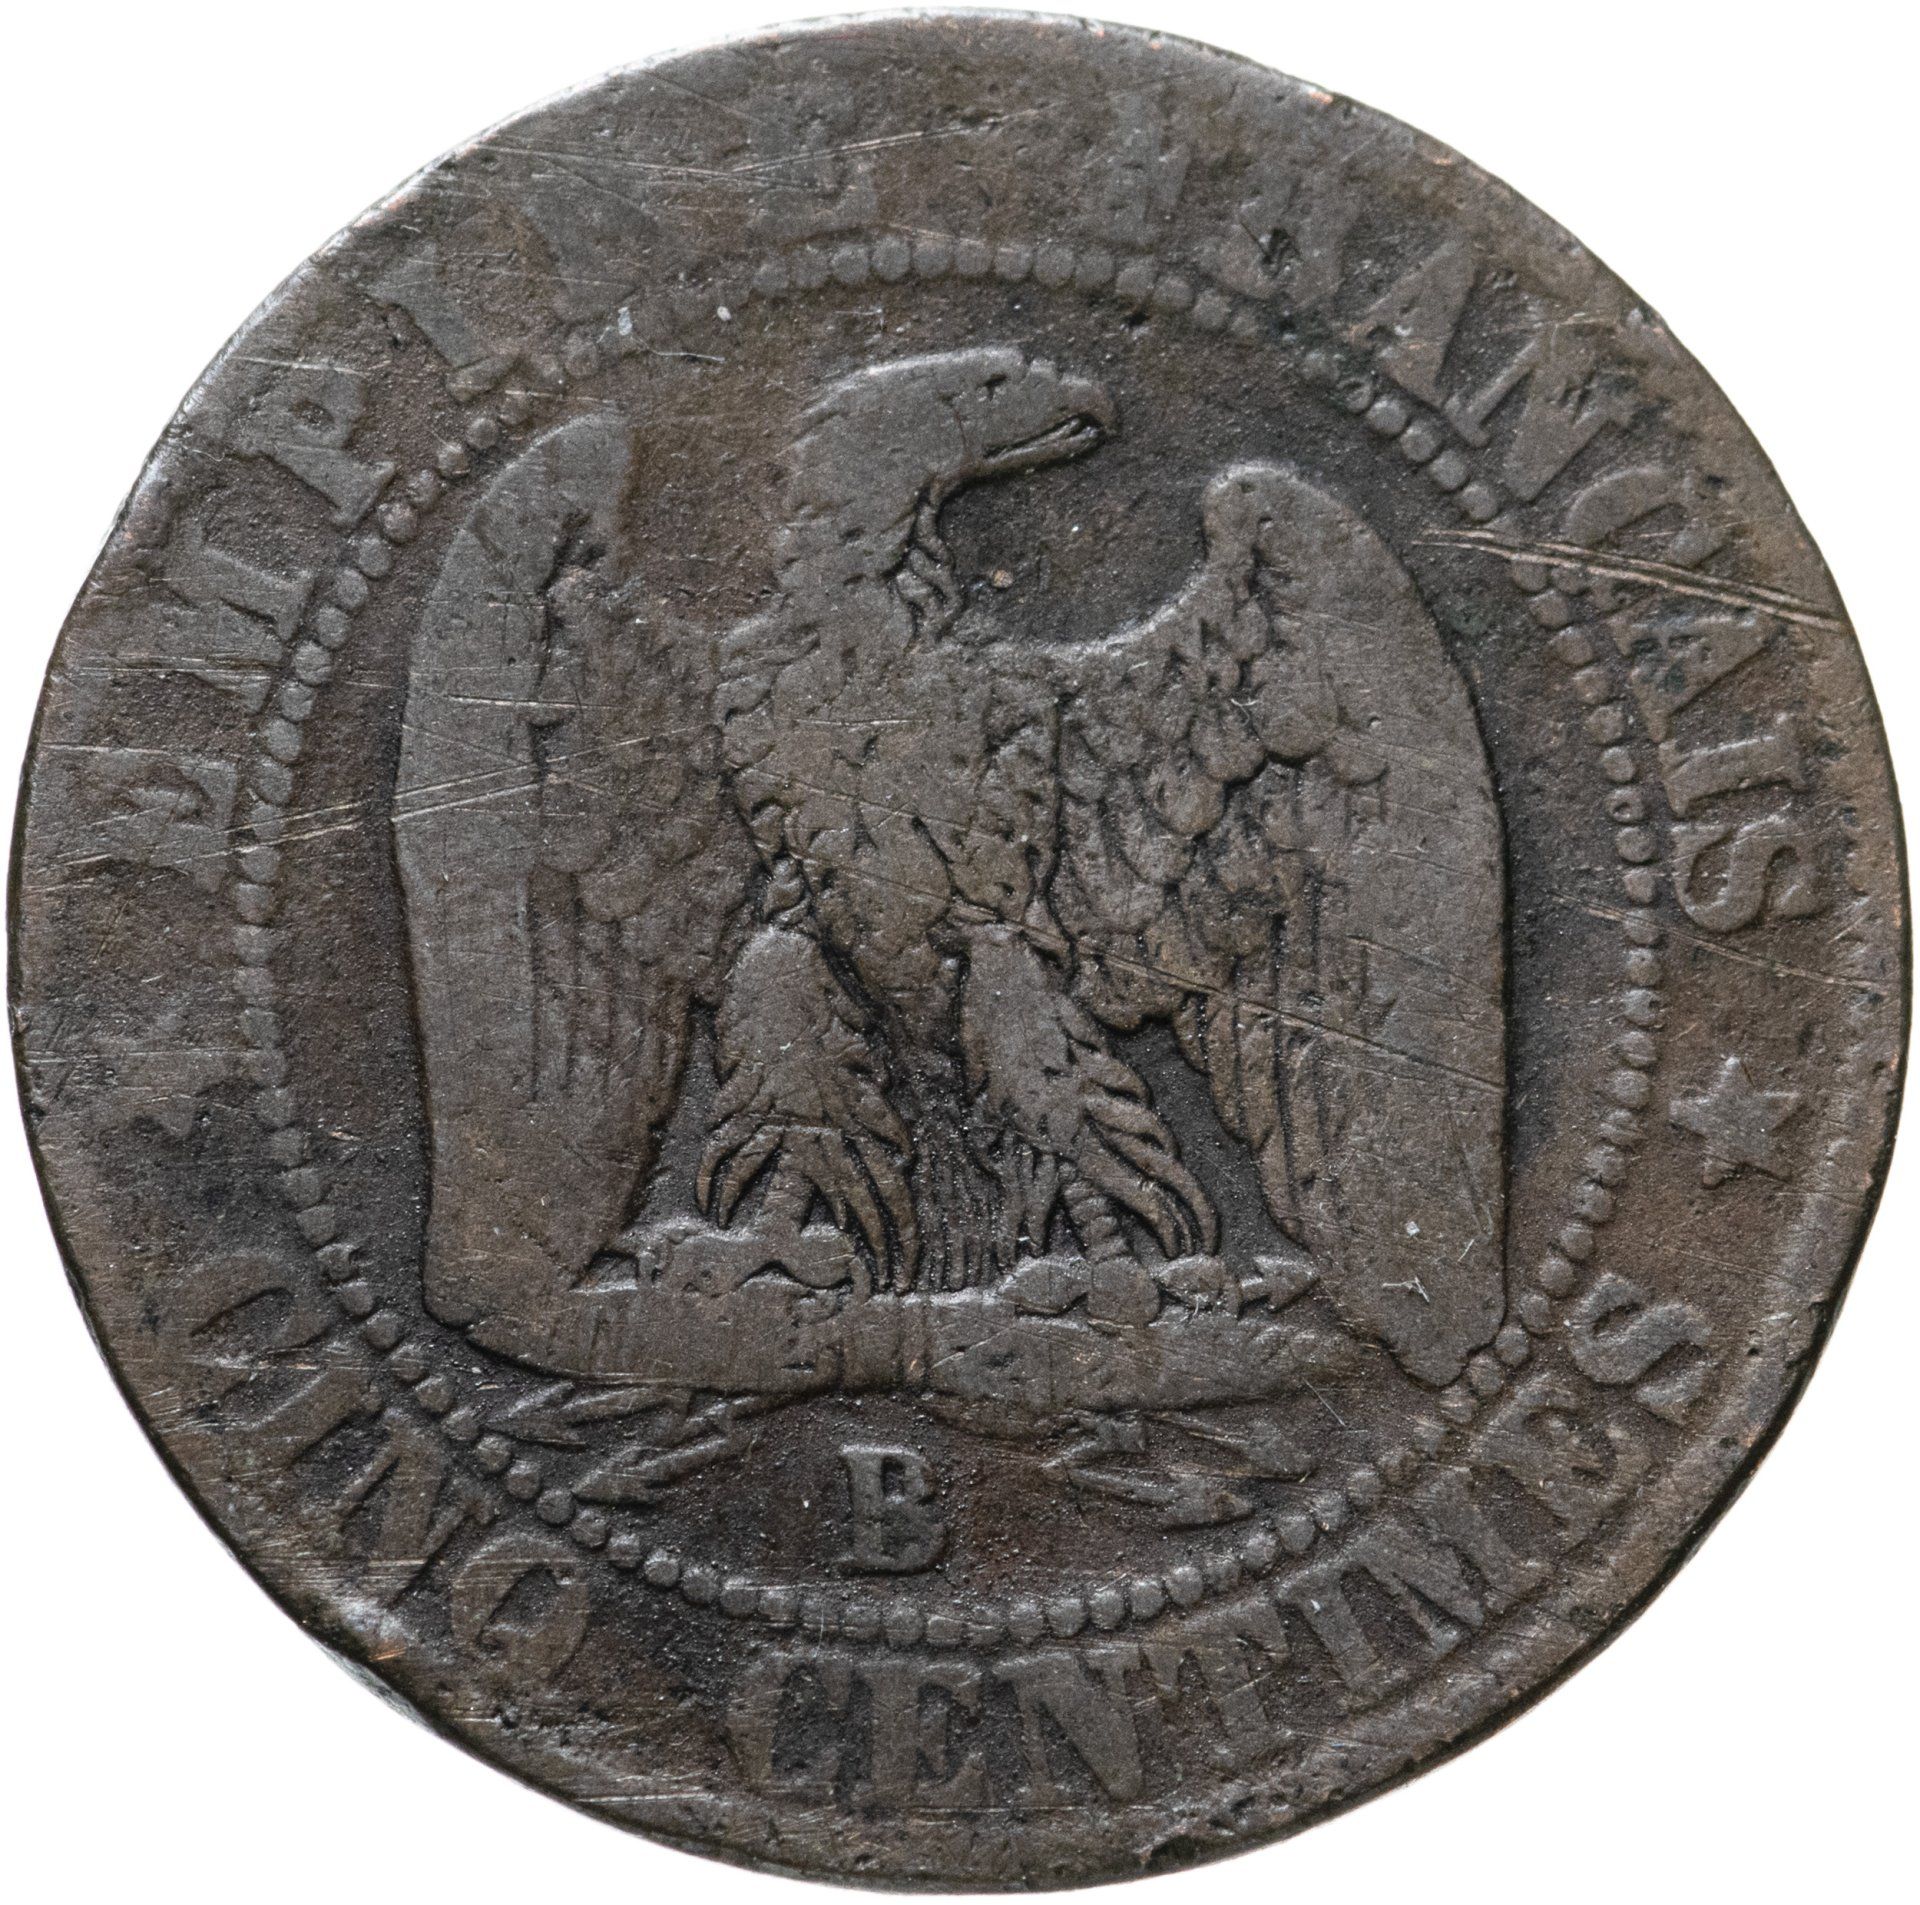 Бывшая французская монета. 10 Сантимов Франция 1855. Монета Франции 1856 монета. Монеты Франции 1855 года.. Французские монеты 1855 года.